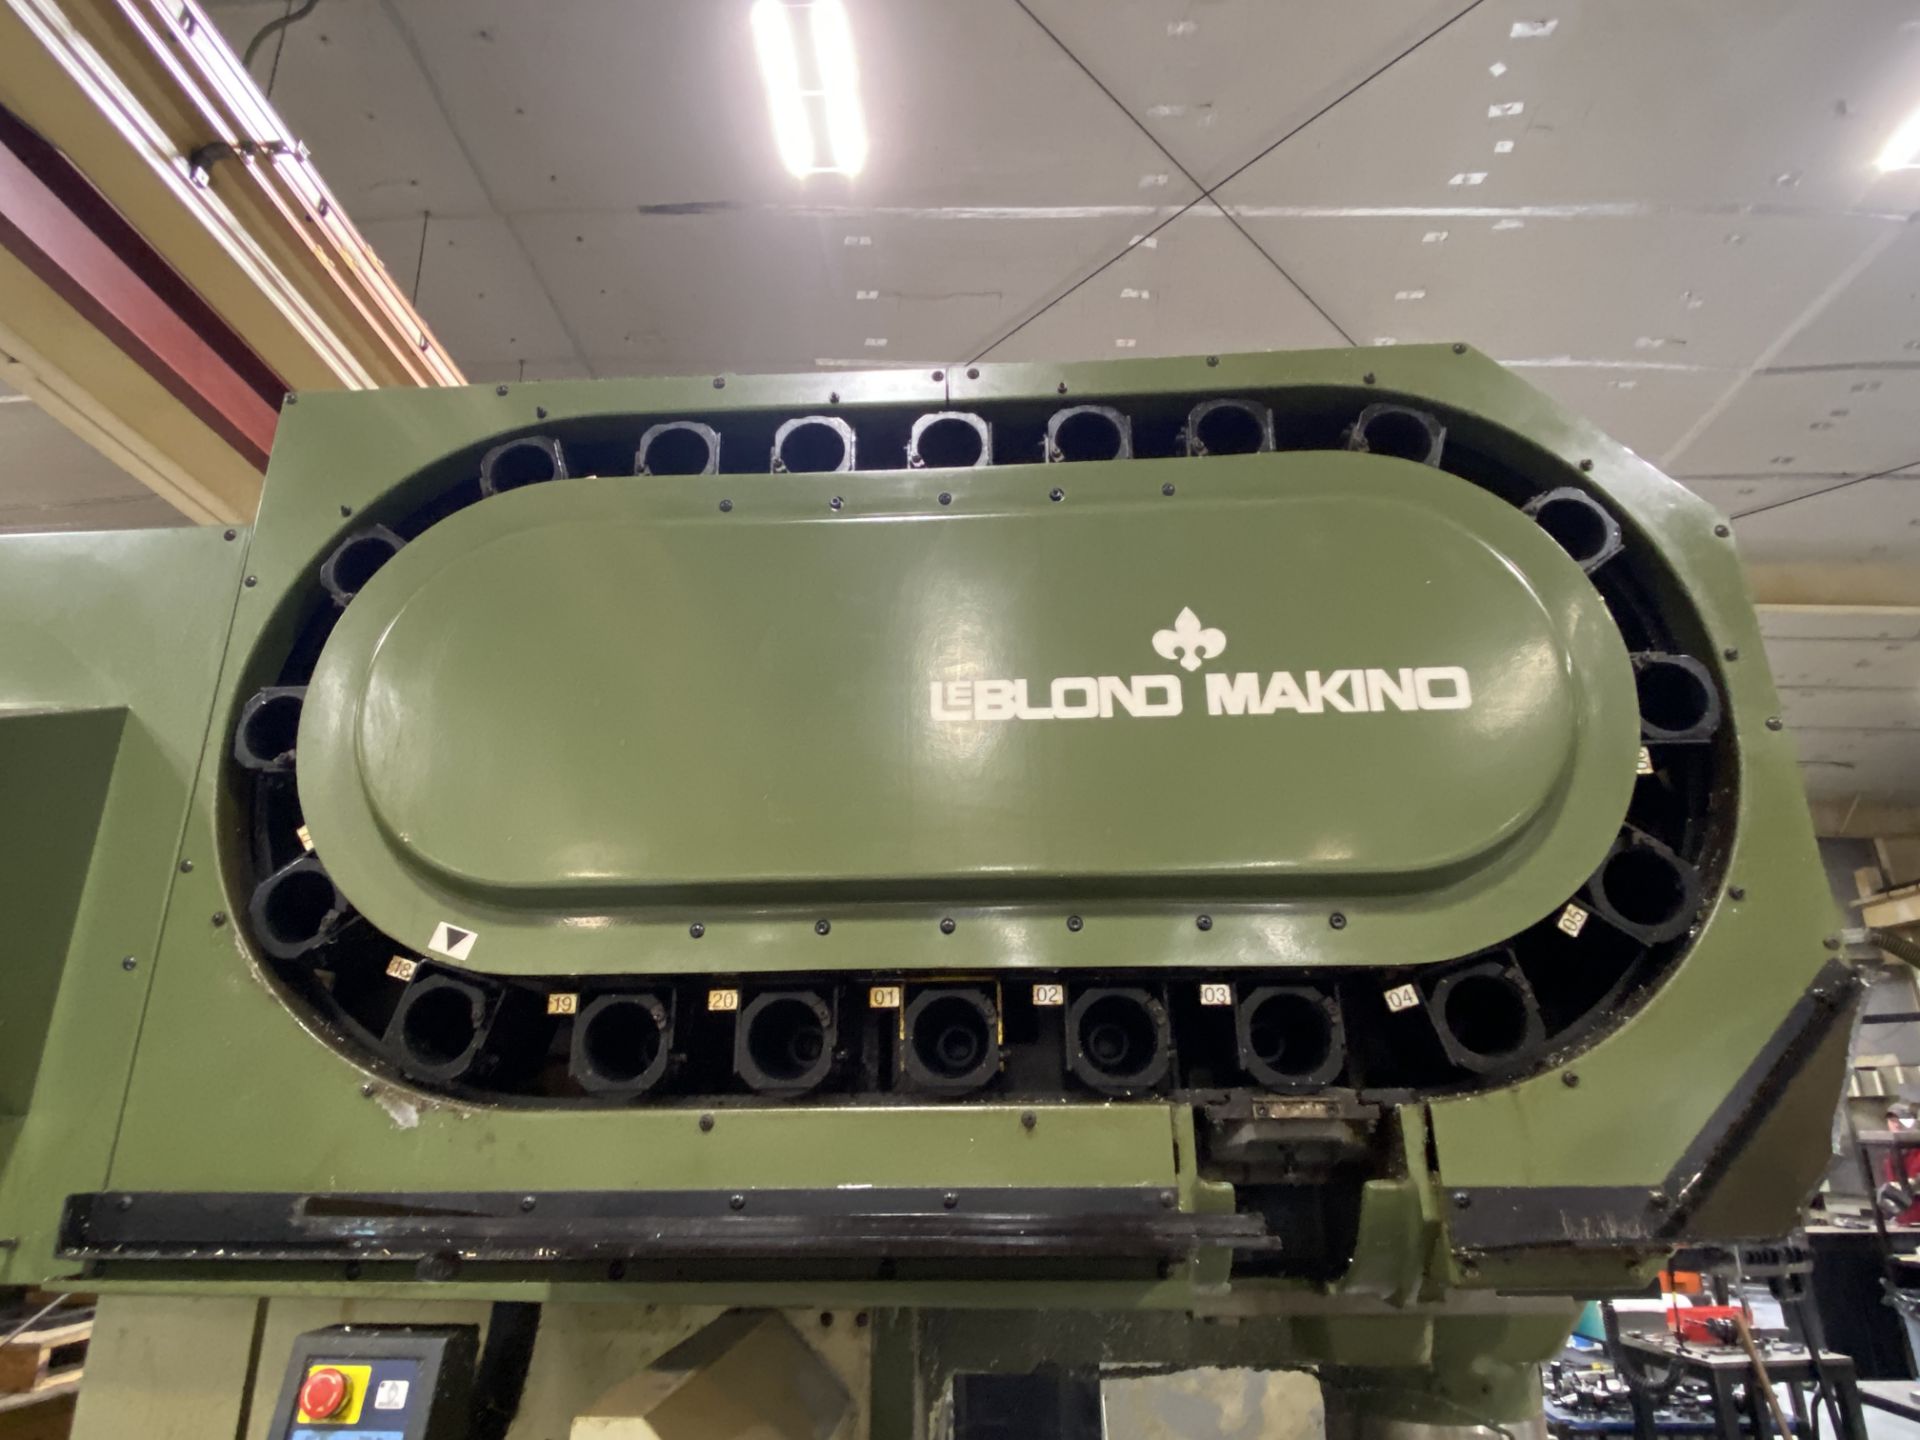 Leblond Makino FNC156-A20 CNC Vertical Machining Center - Image 8 of 19